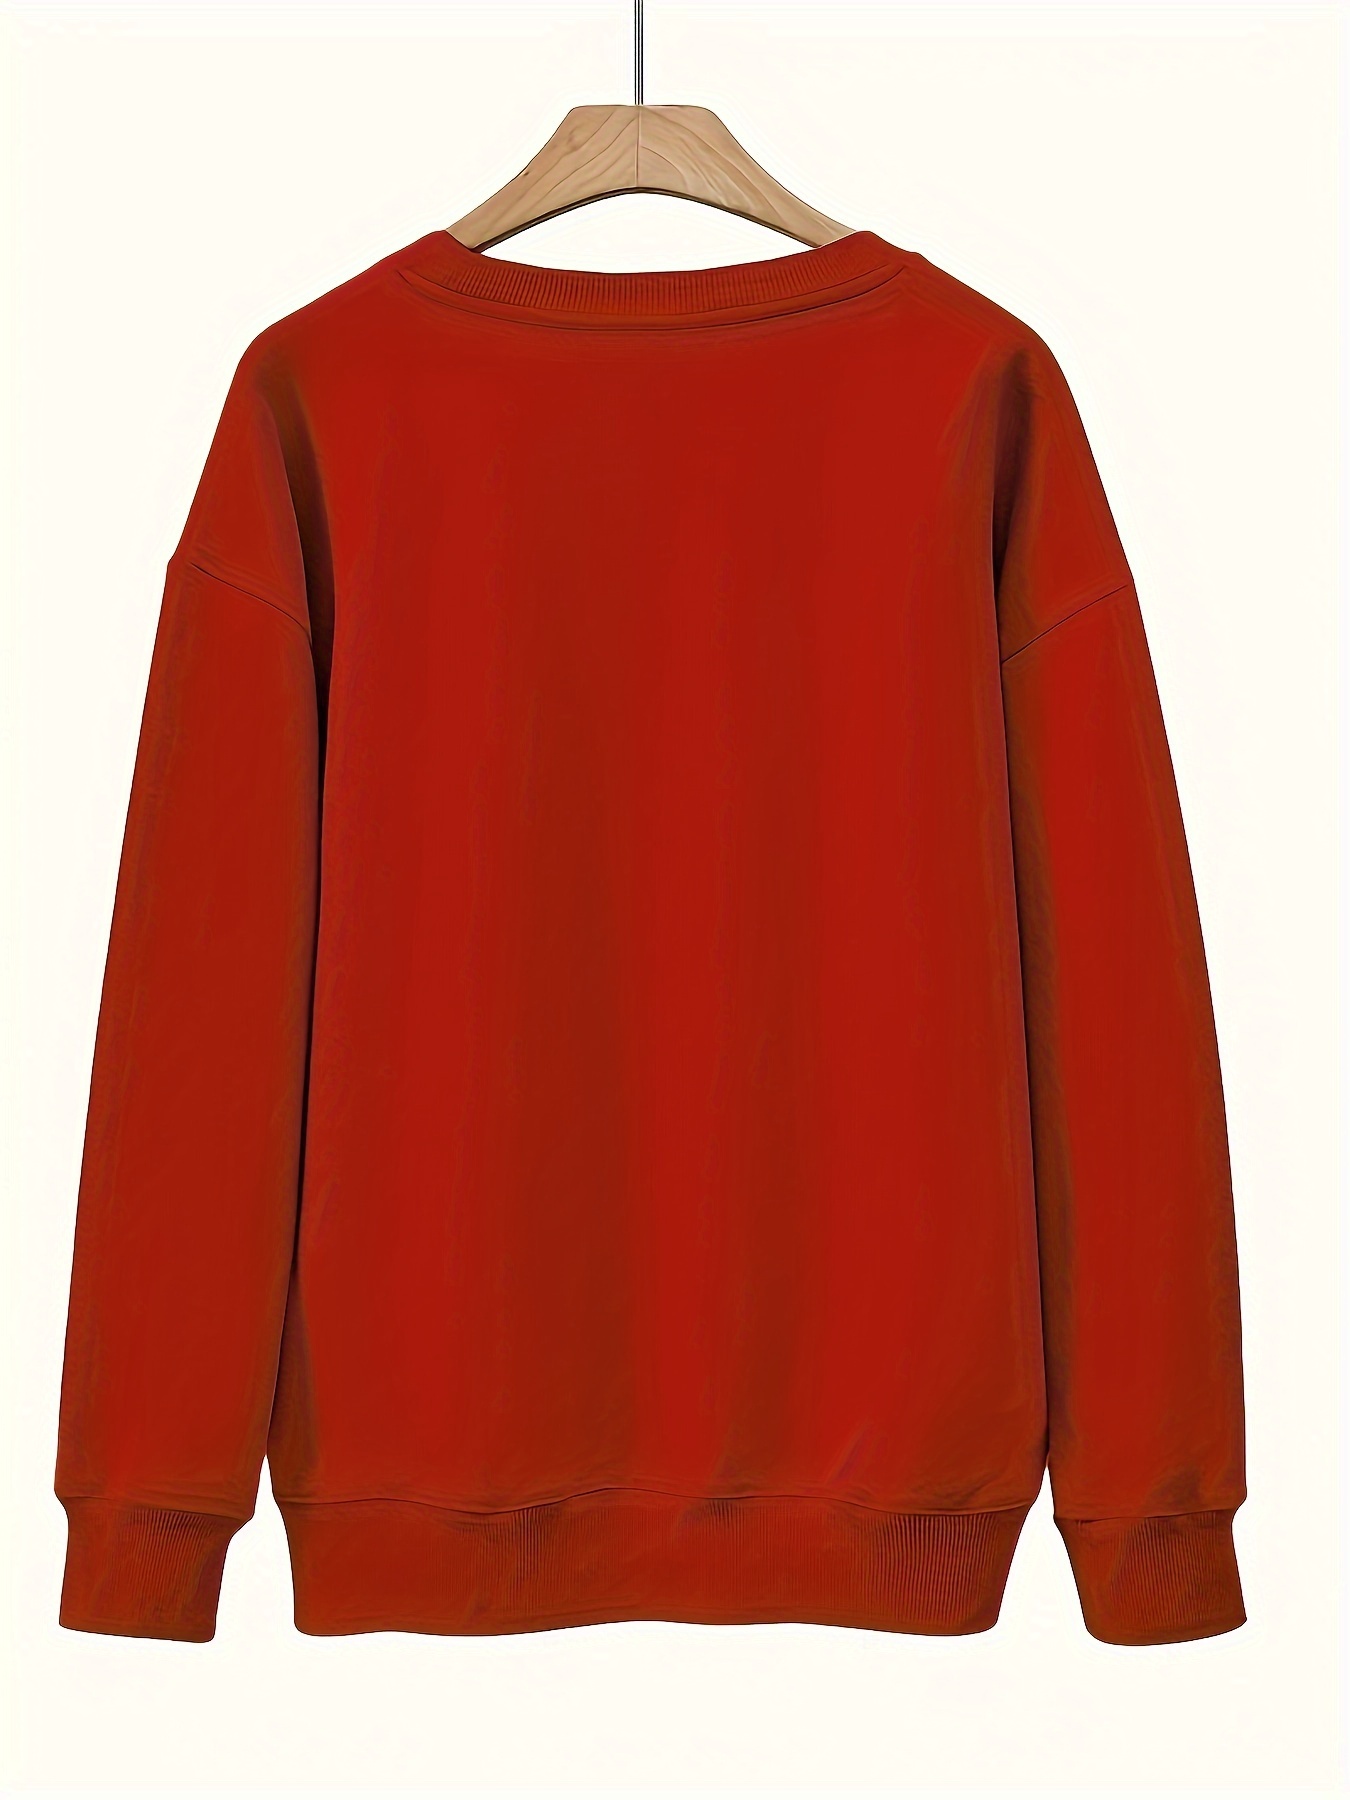 JSGEK Savings Women Oversize Funny Text Letter Print Round-Neck Long Sleeve  Loosen Single Sweatshirt Tops Pullover Blouse 